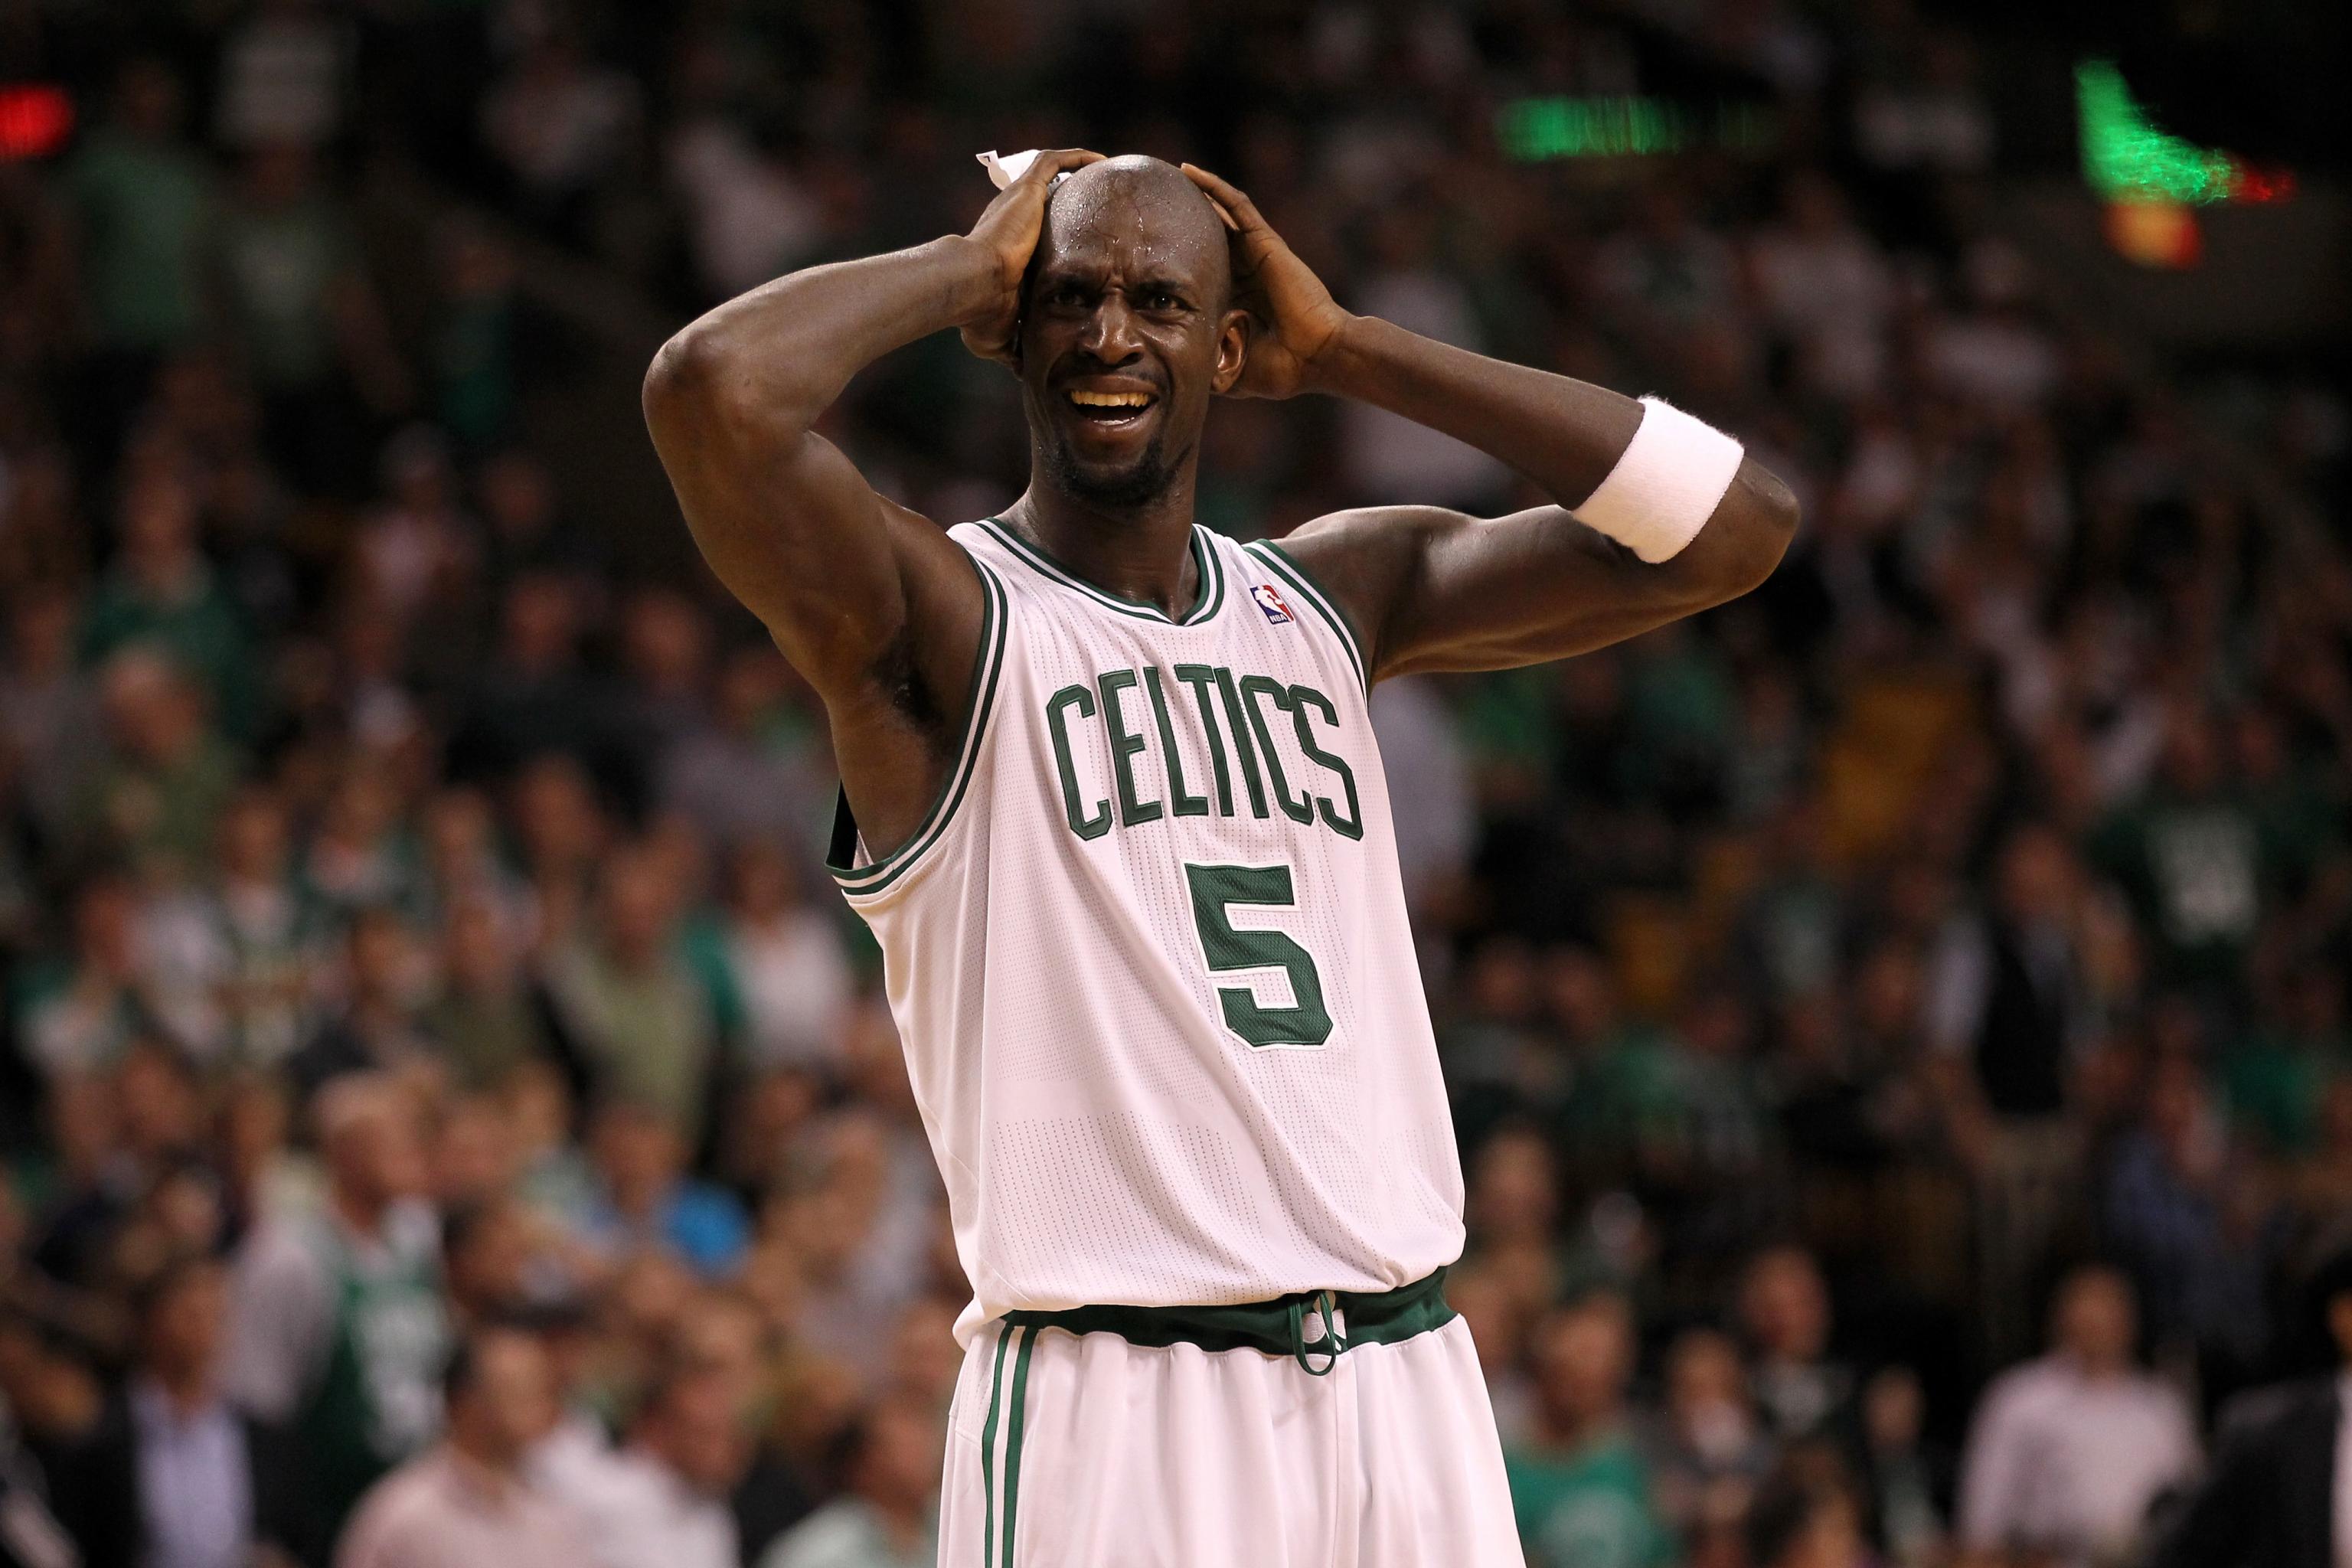 Rumor: Celtics F Kevin Garnett to consider retirement after